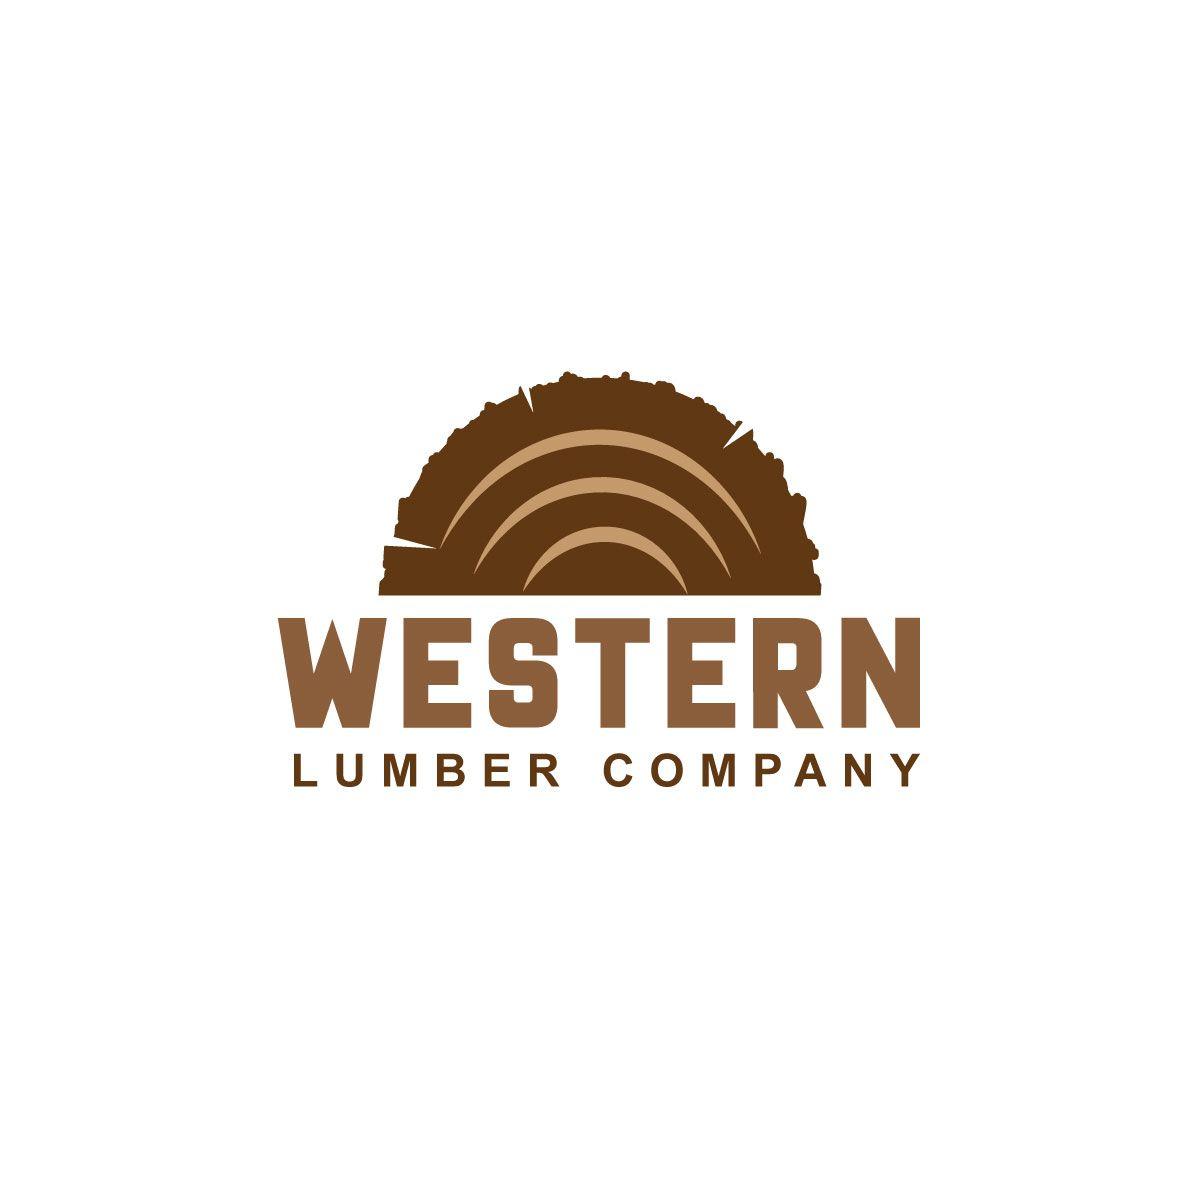 Lumber Logo - Elegant, Playful, It Company Logo Design for Western Lumber Company